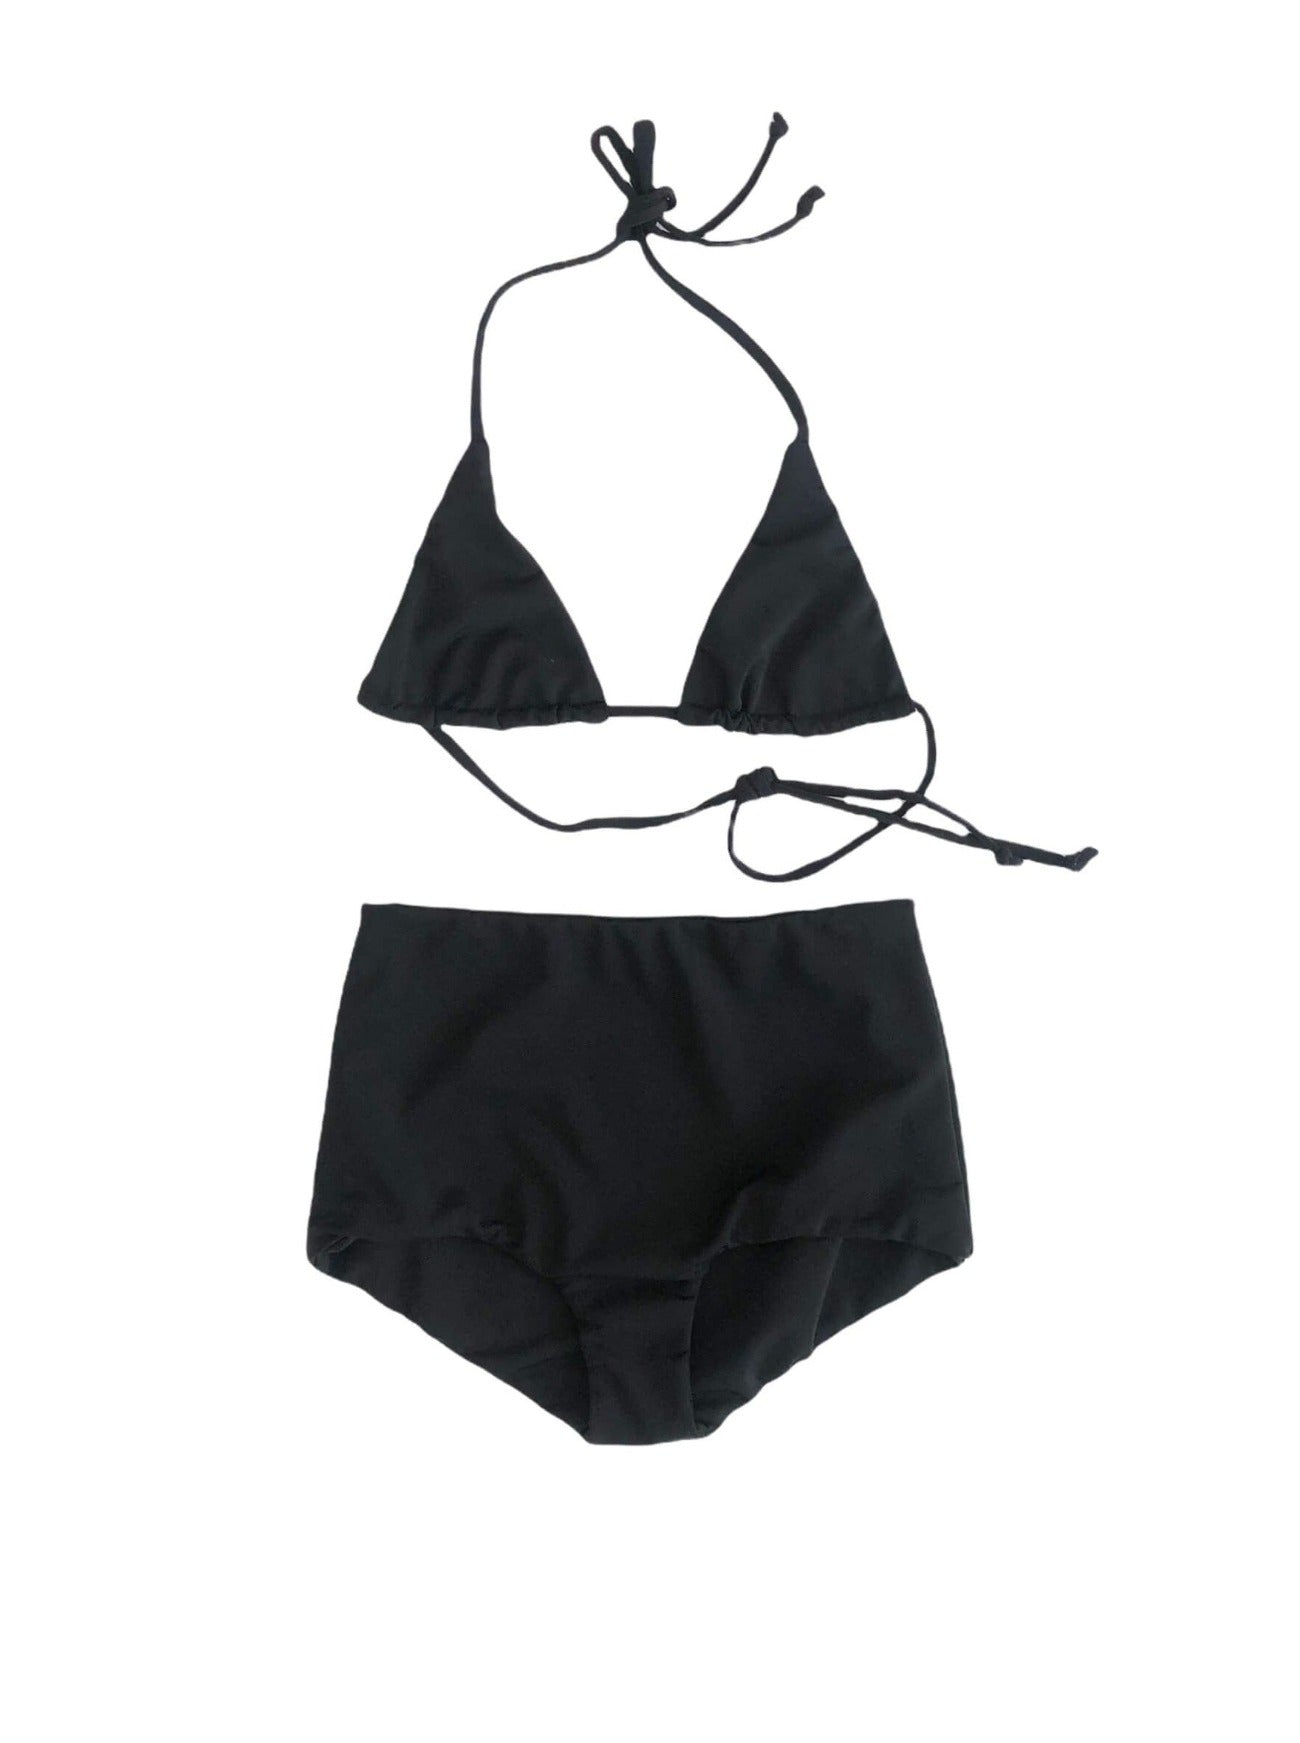 black lido swimsuit set sold separately